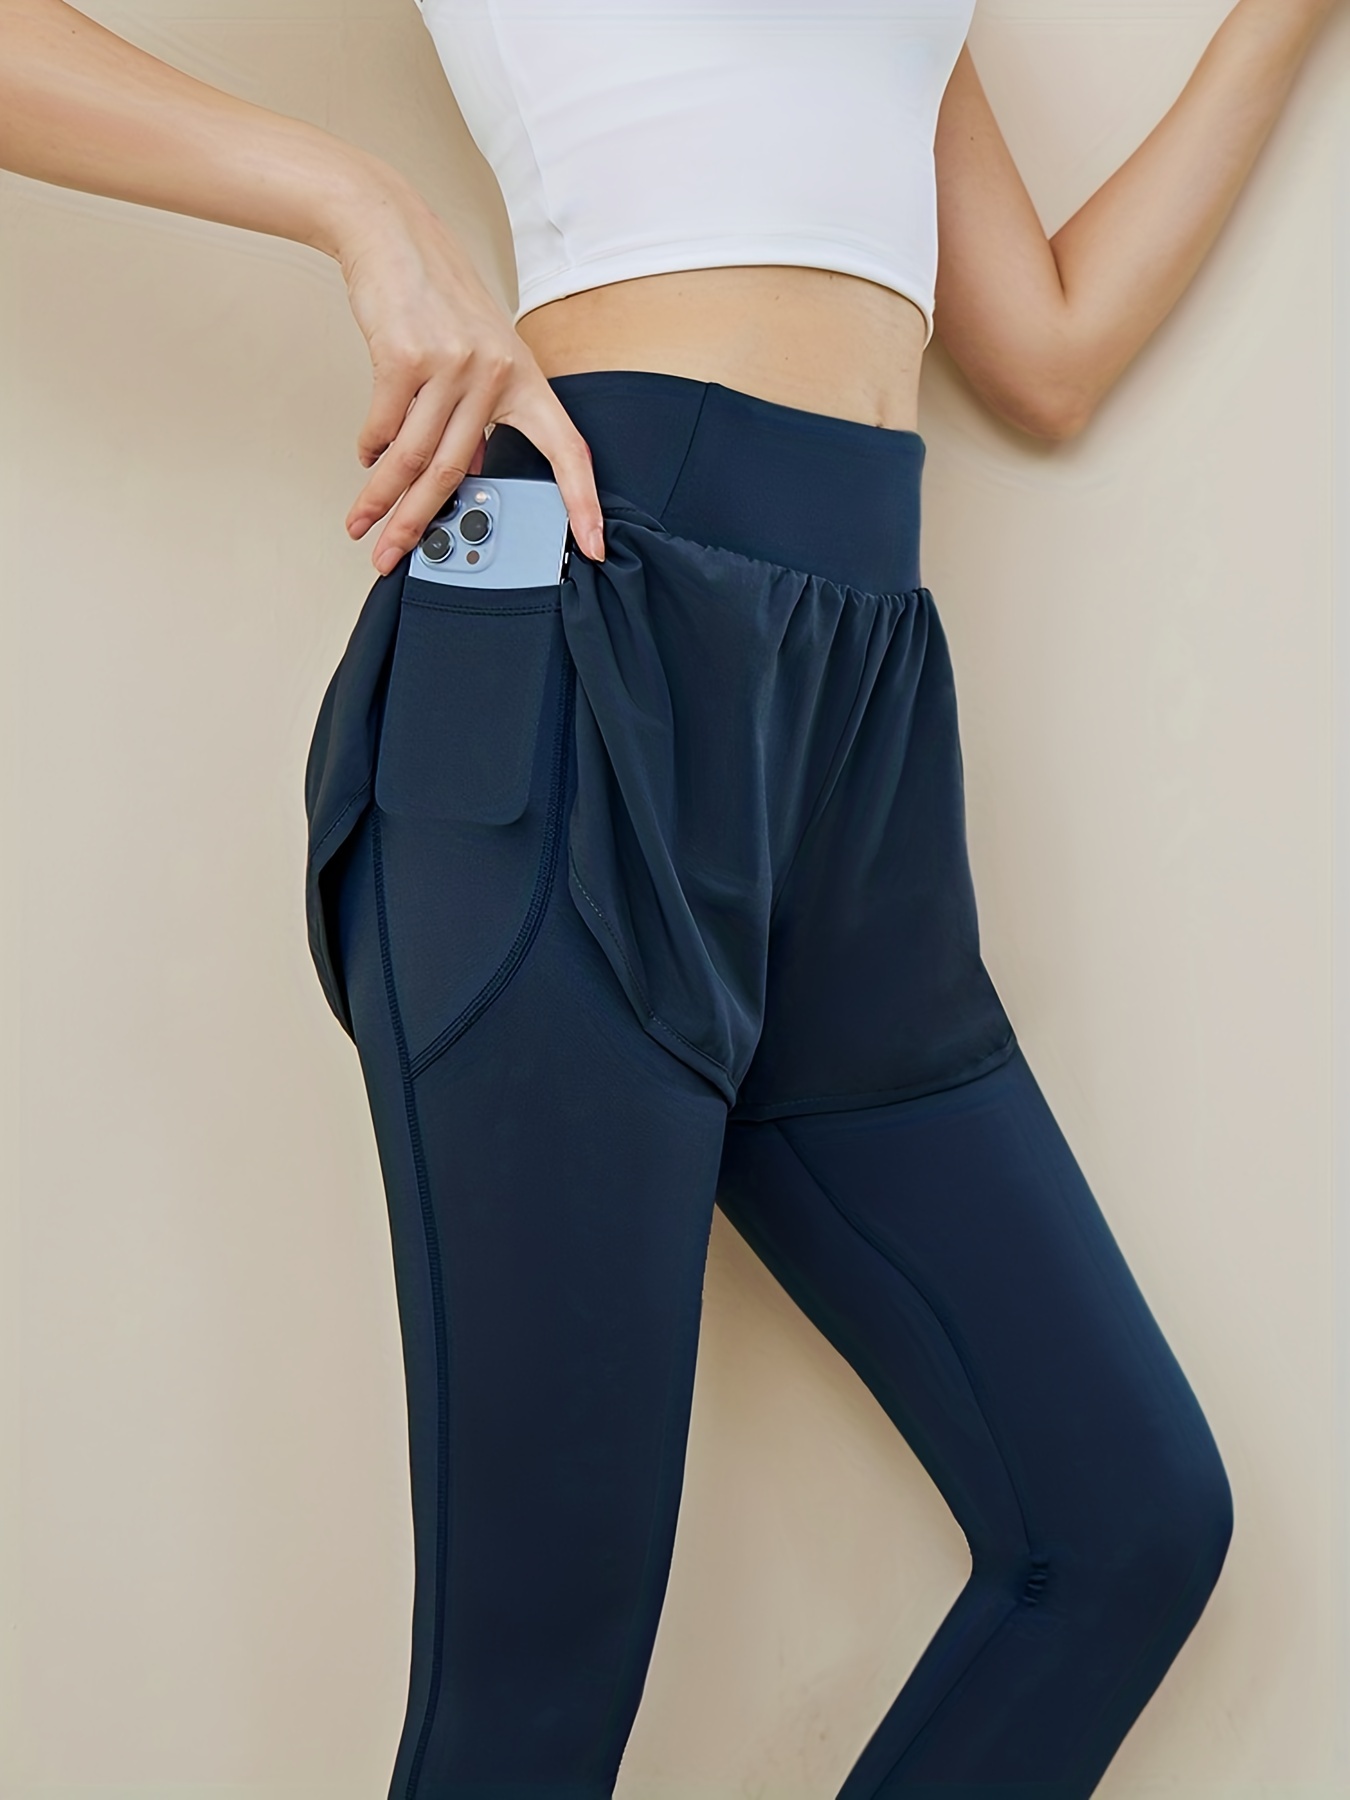 adviicd Sport Tummy Control 100% Cotton Yoga Pants for Women